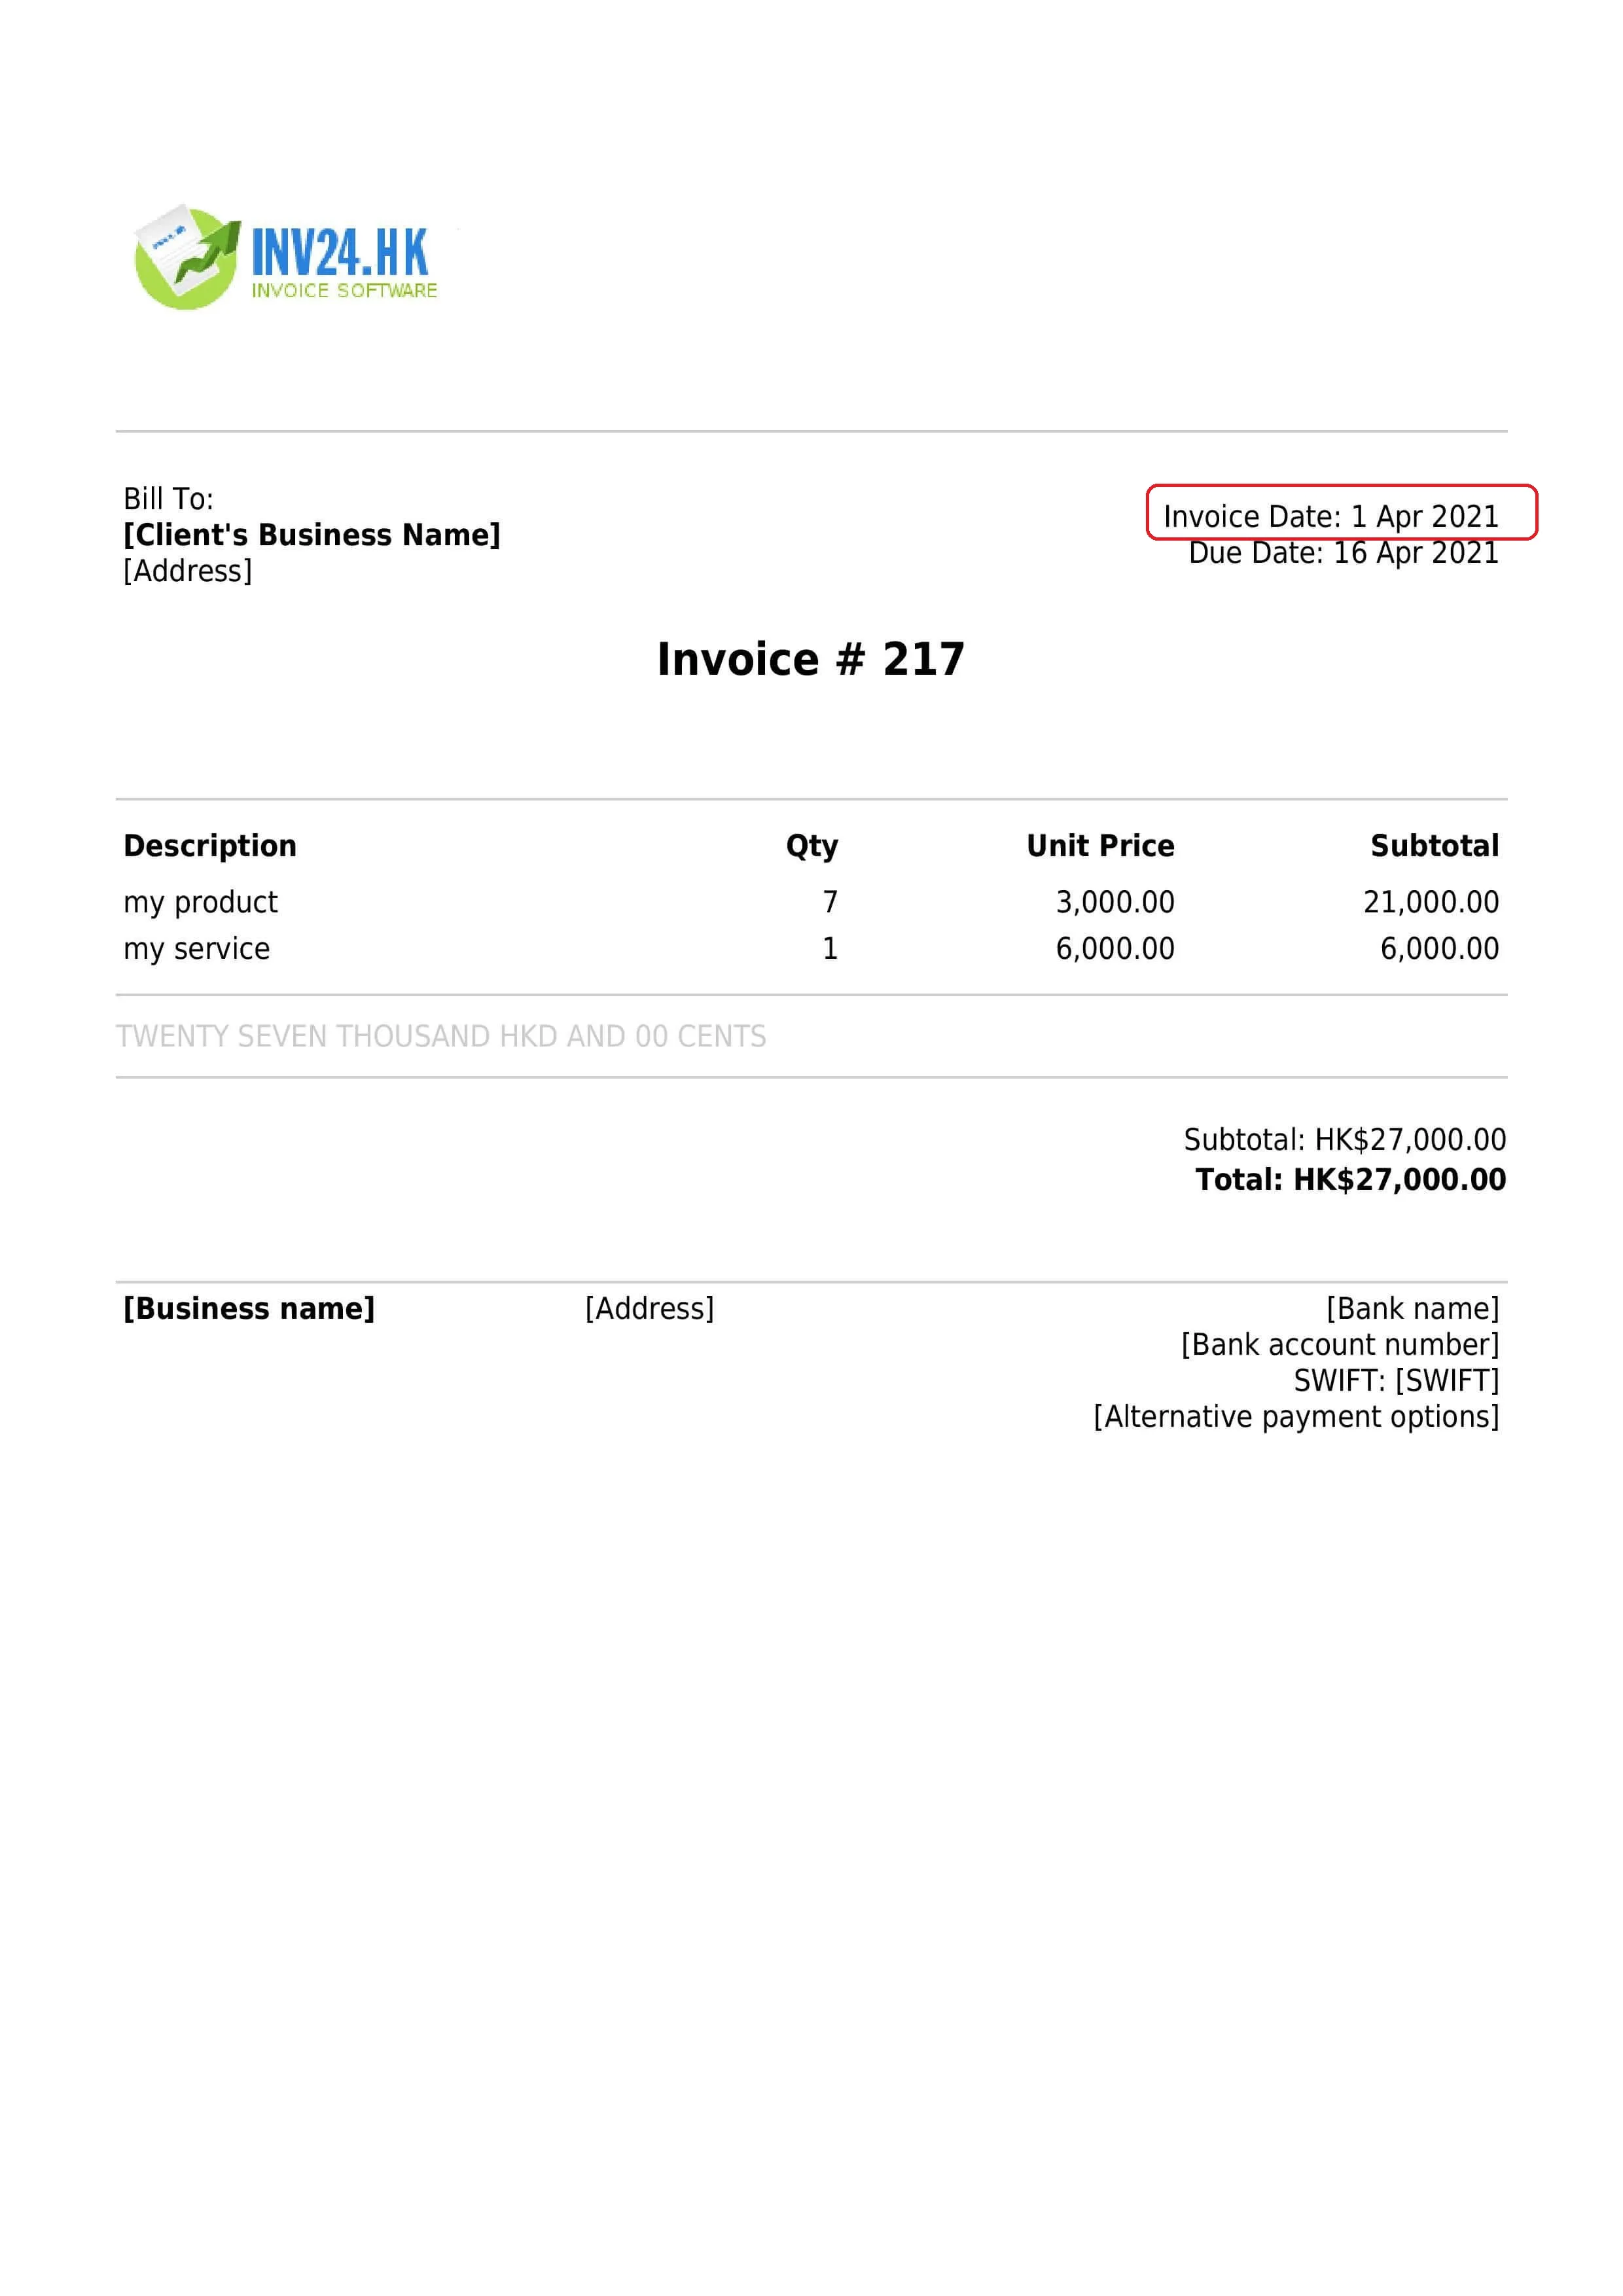 invoice date